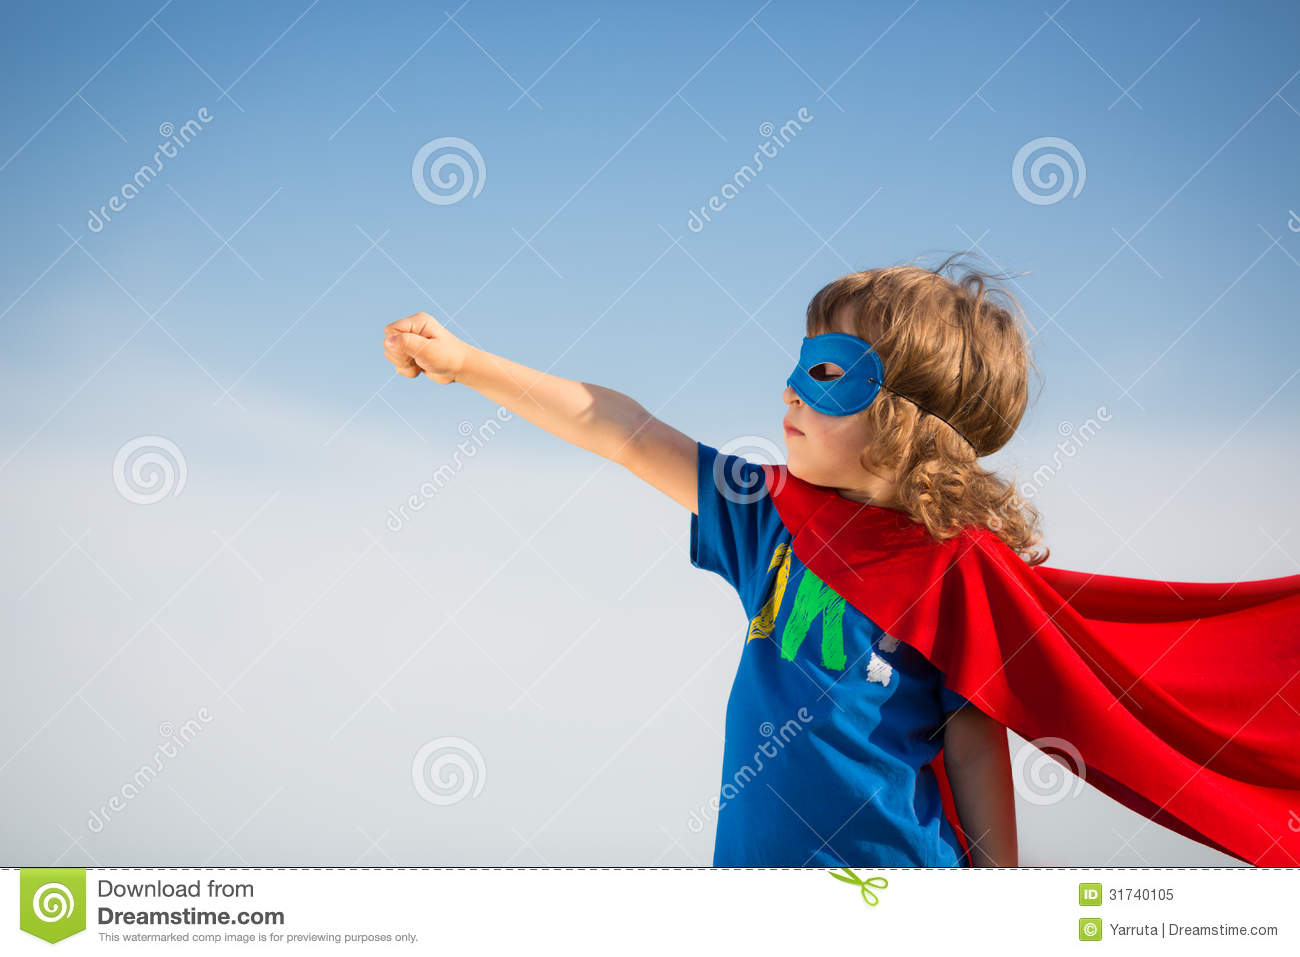 Superhero stock photos